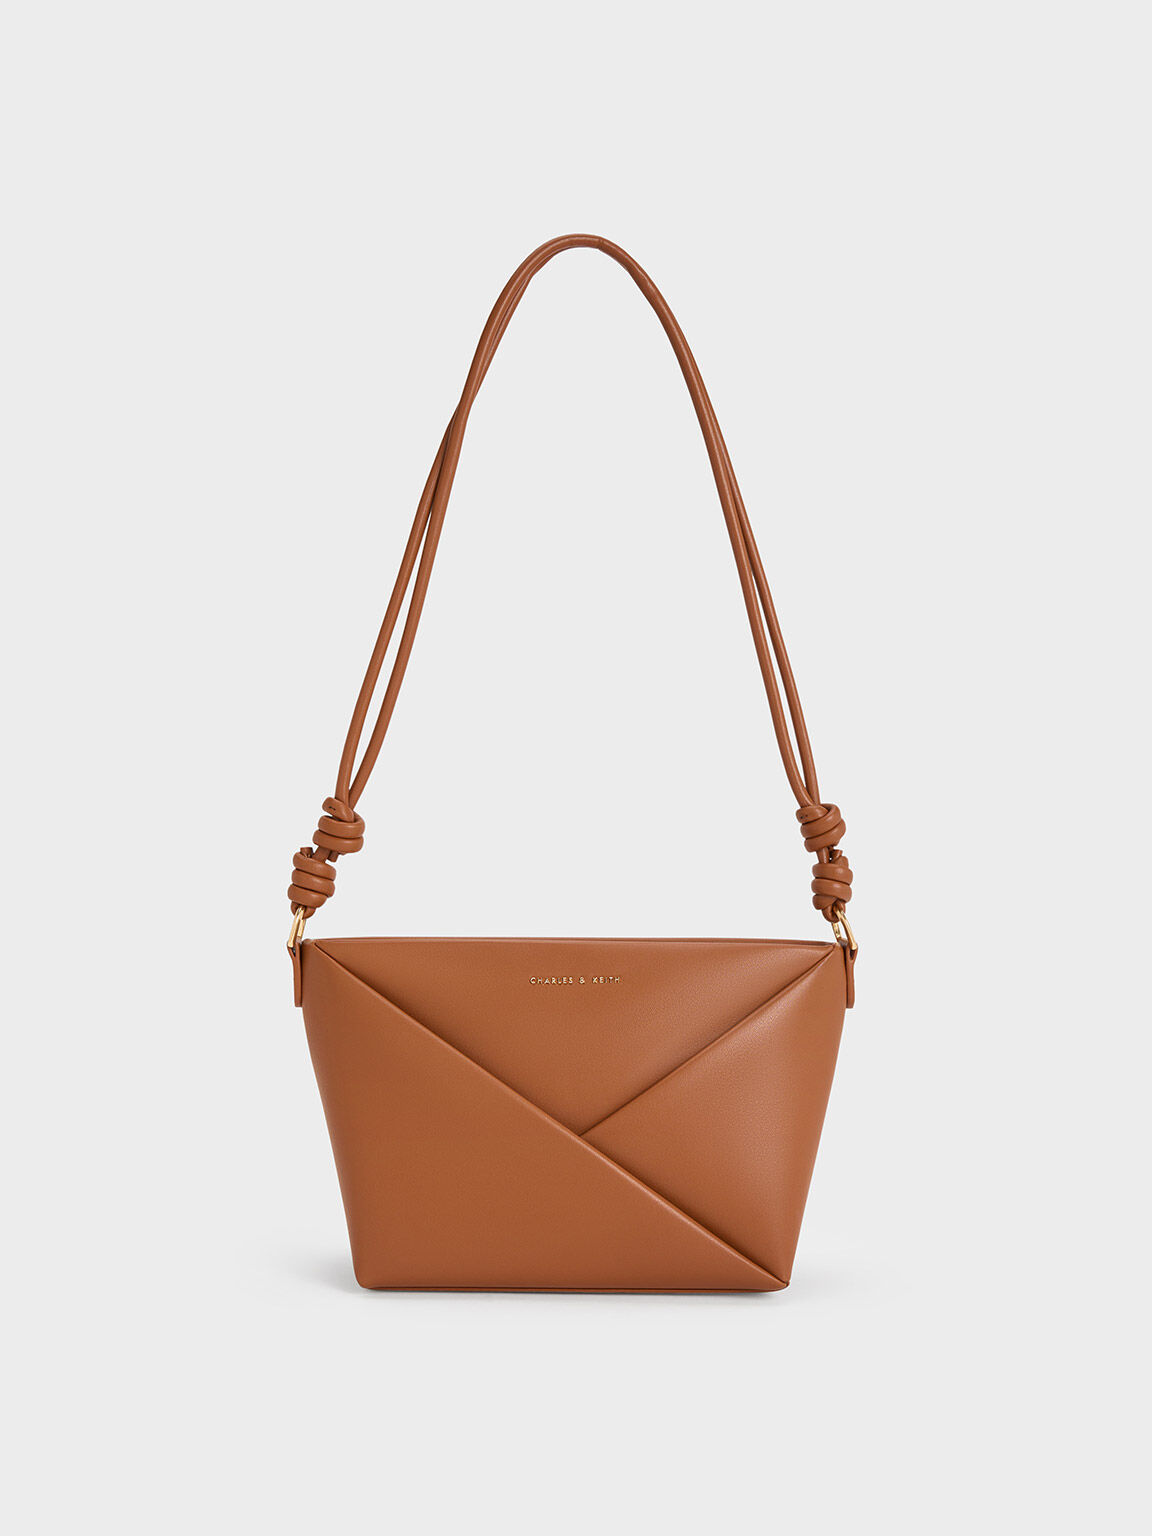 Charles & Keith Women's Geometric Boxy Top Handle Bag